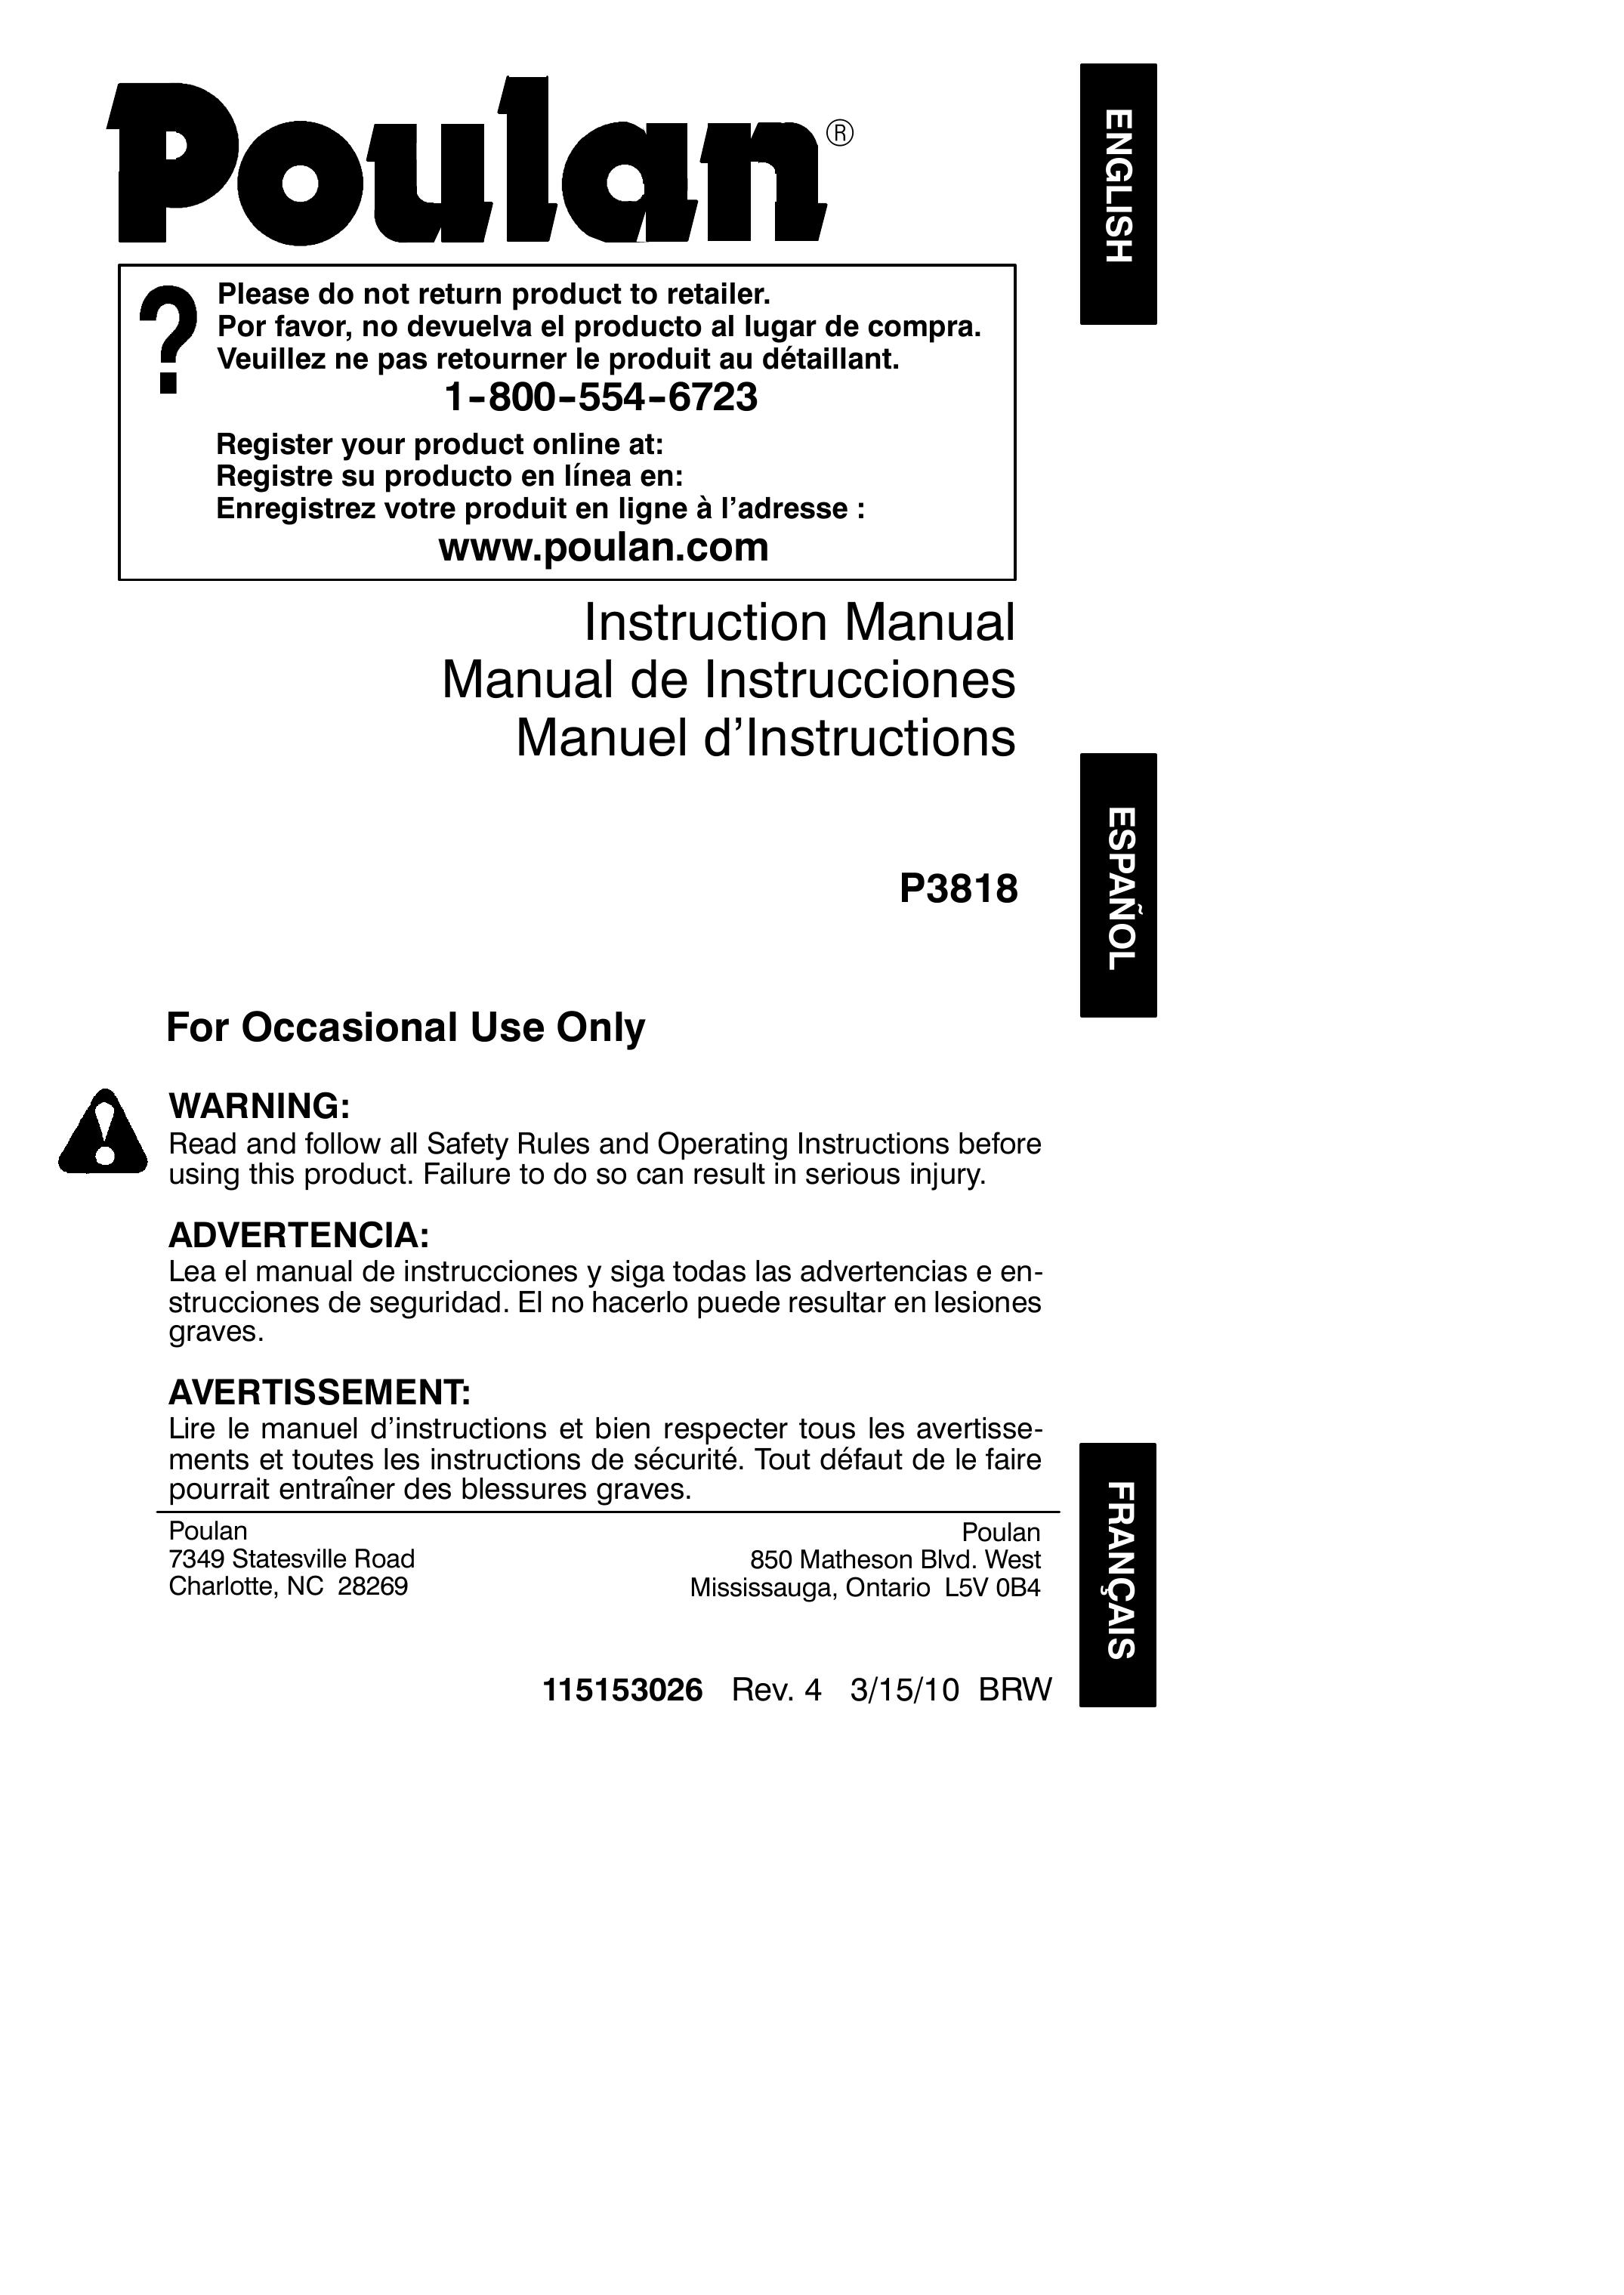 Poulan 115153026 Chainsaw User Manual